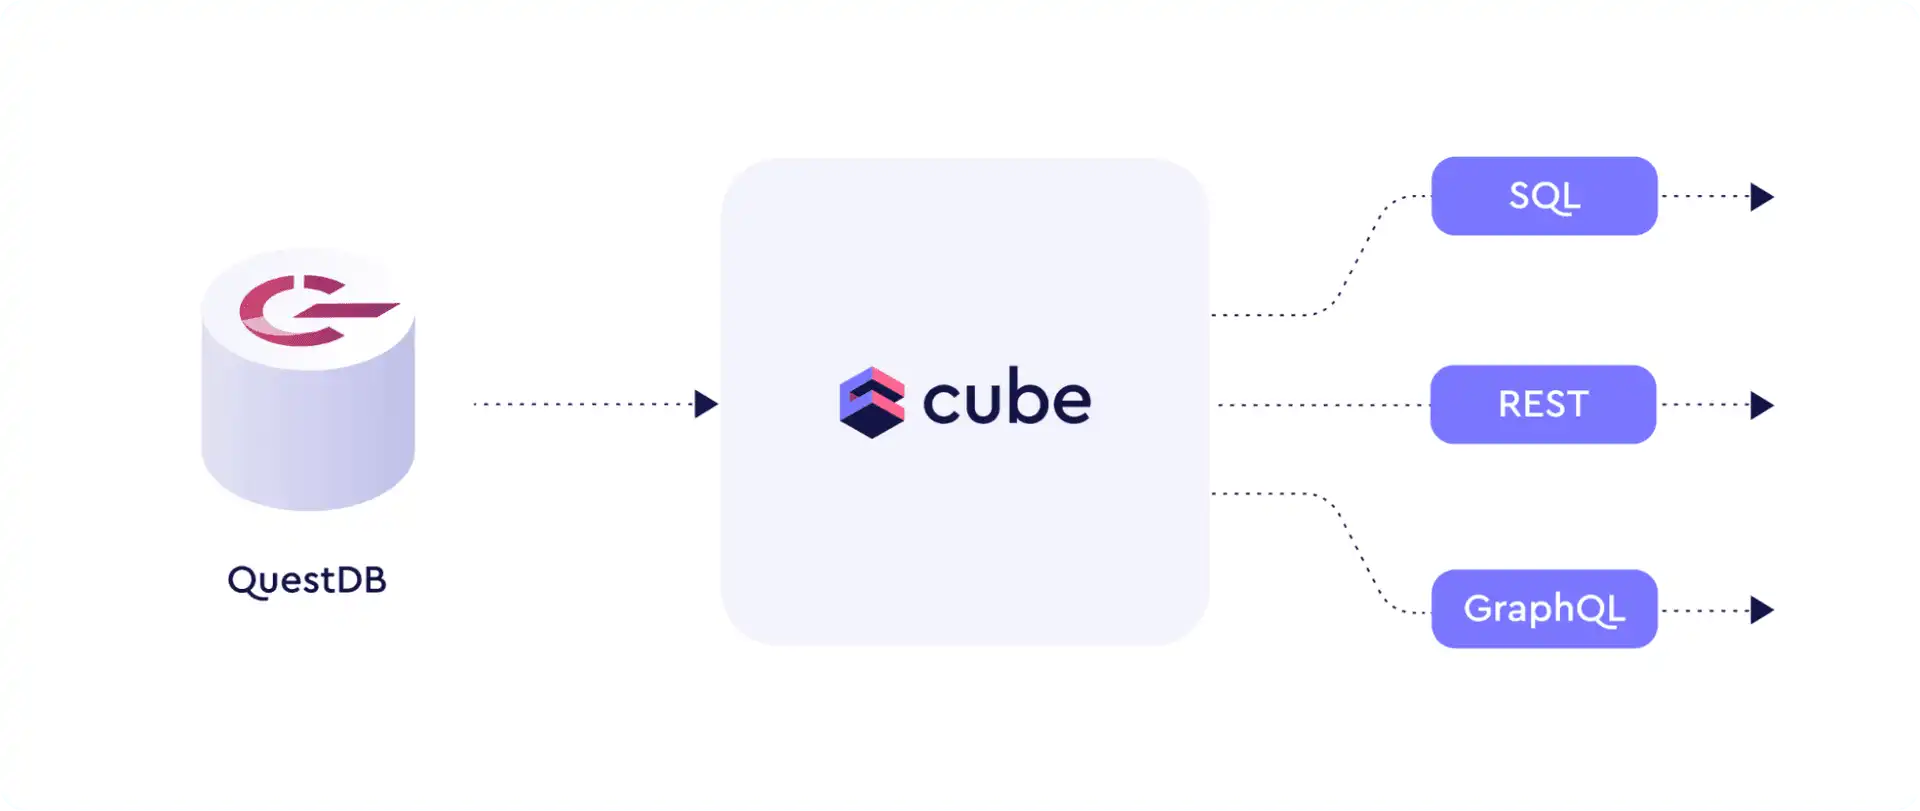 A diagram of QuestDB's and Cube